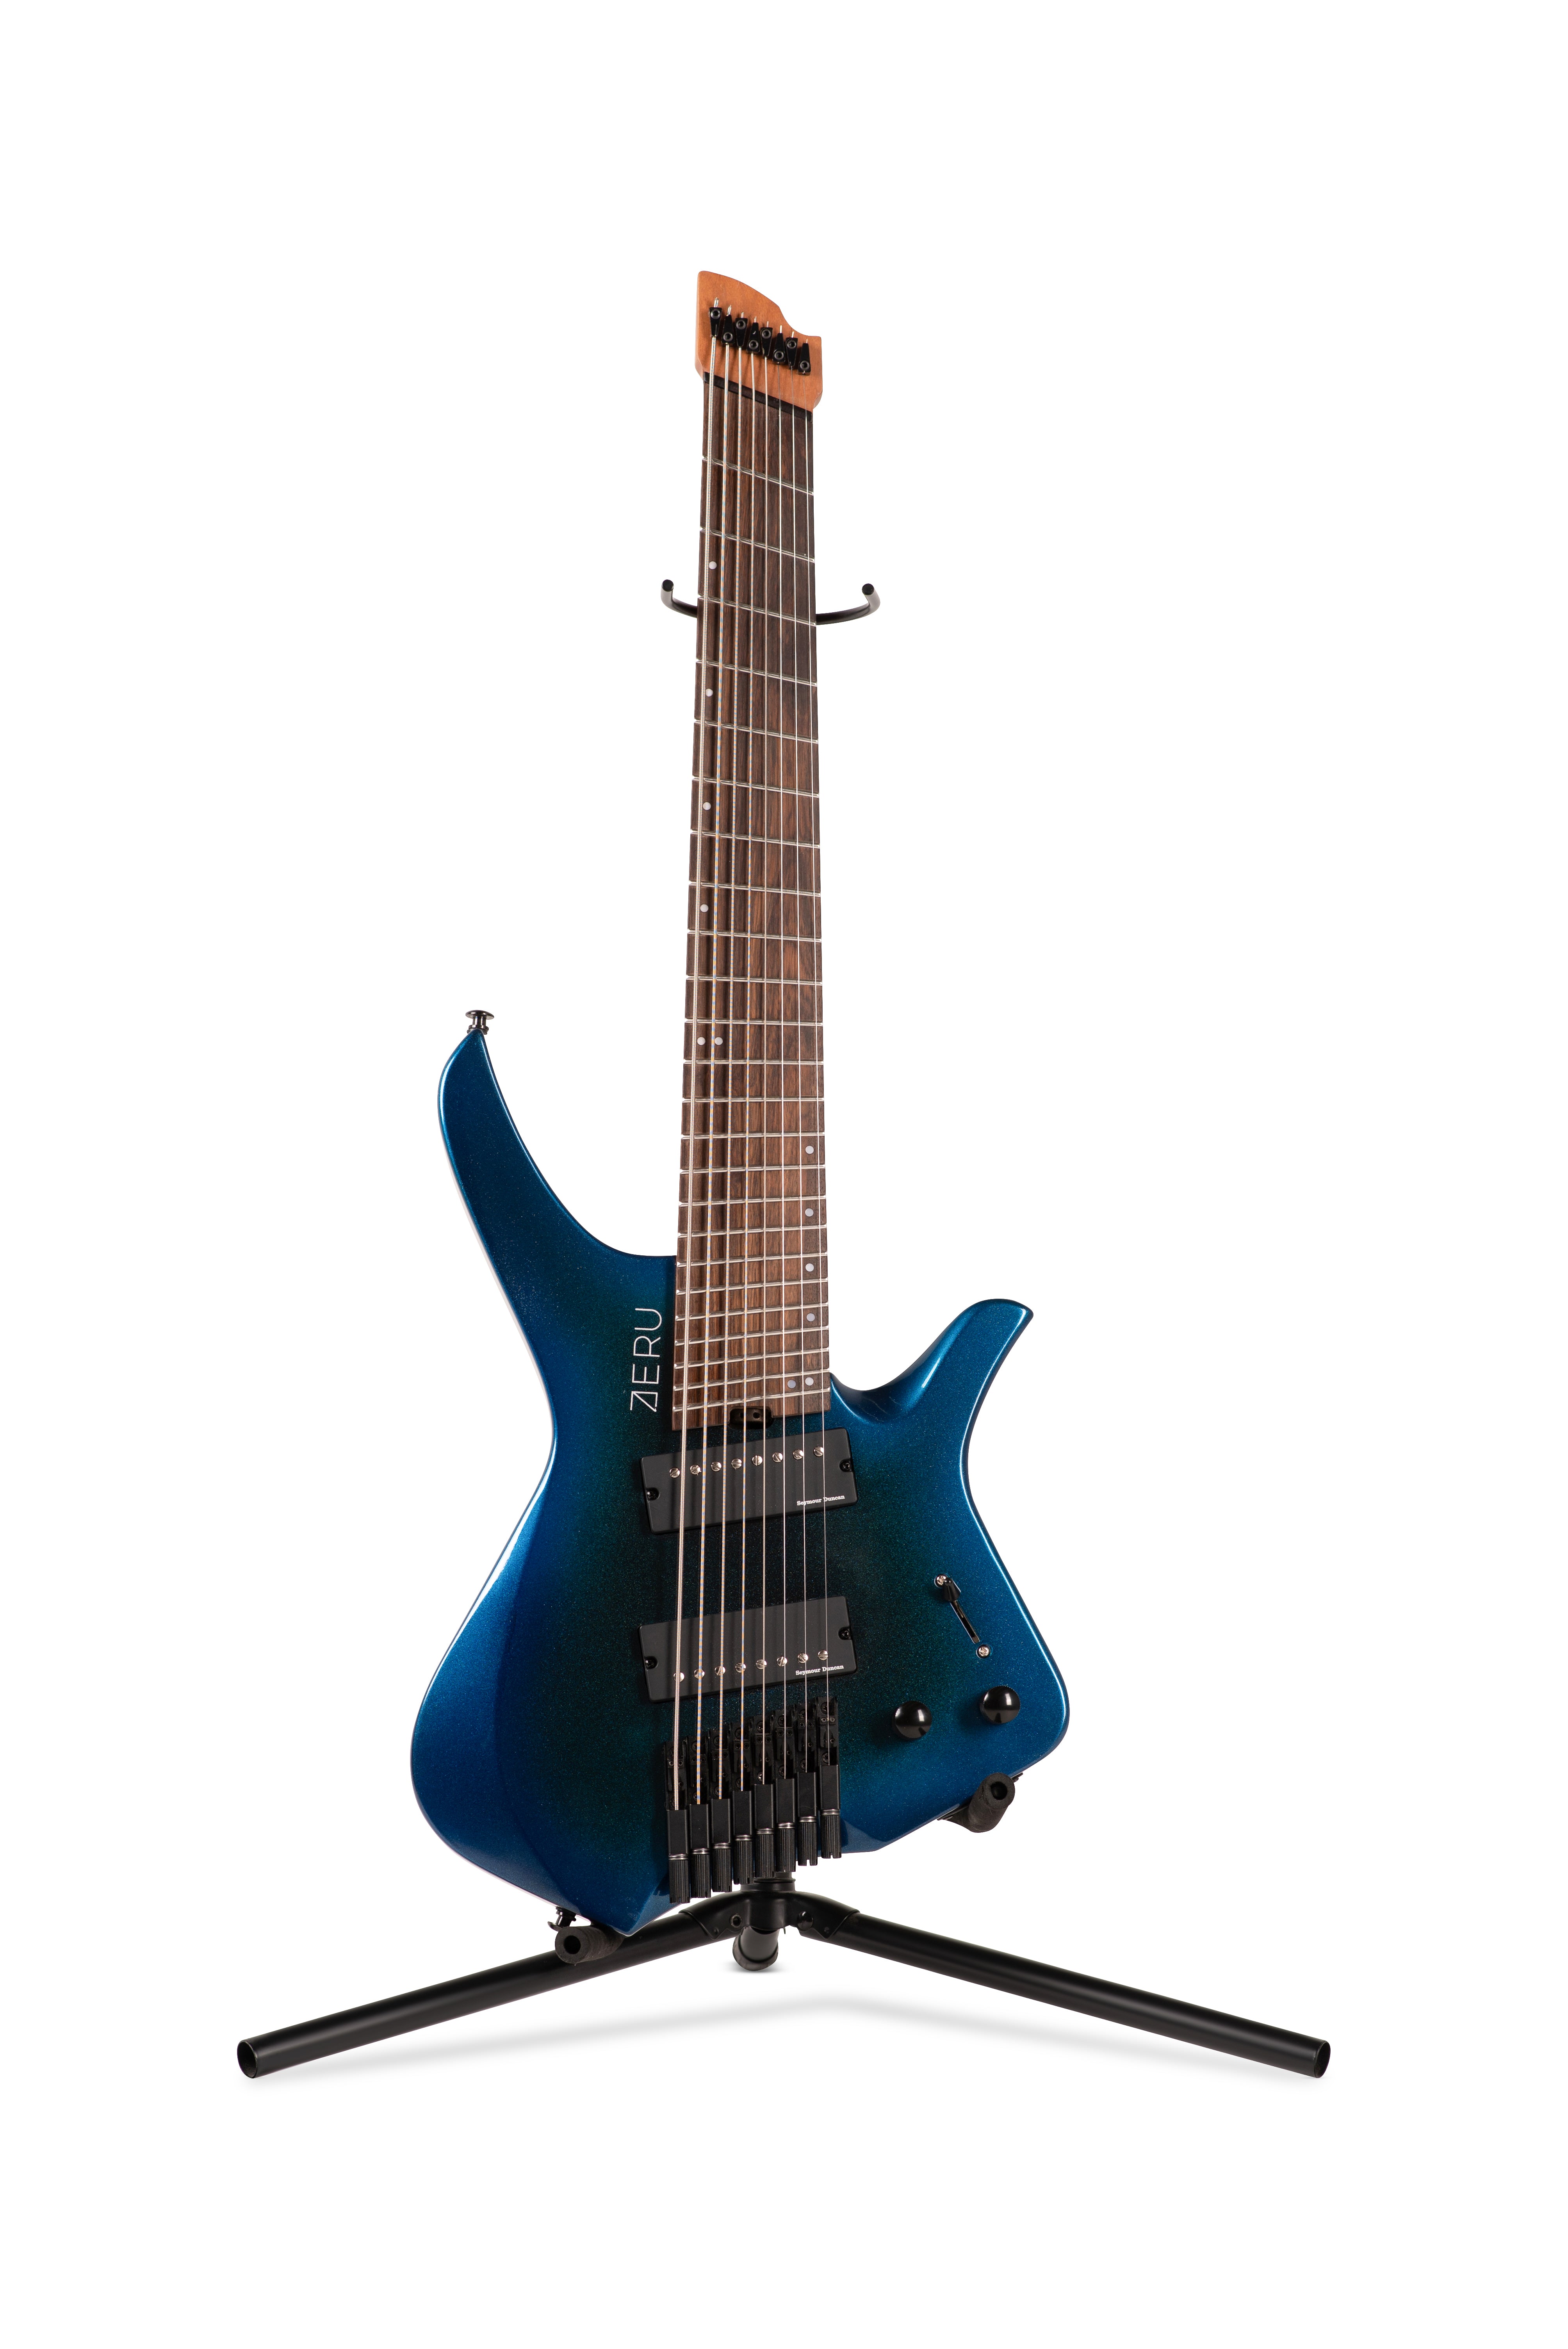 ZERU VOID Series 8 String Headless Guitar in Urdina Nebula